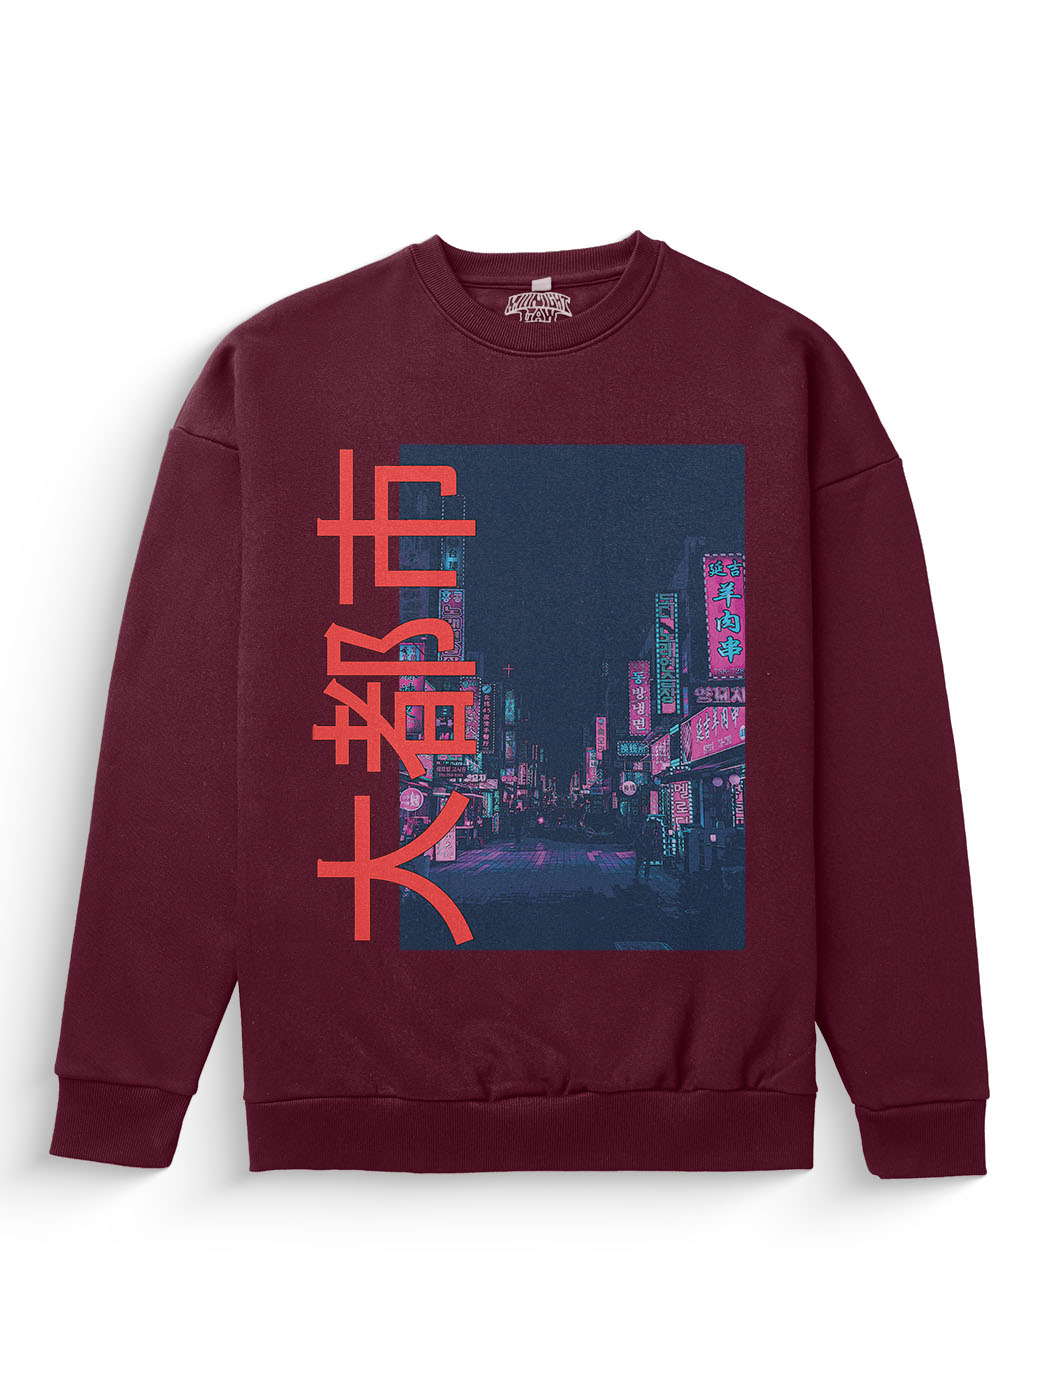 Metropolis Sweatshirt - SALE